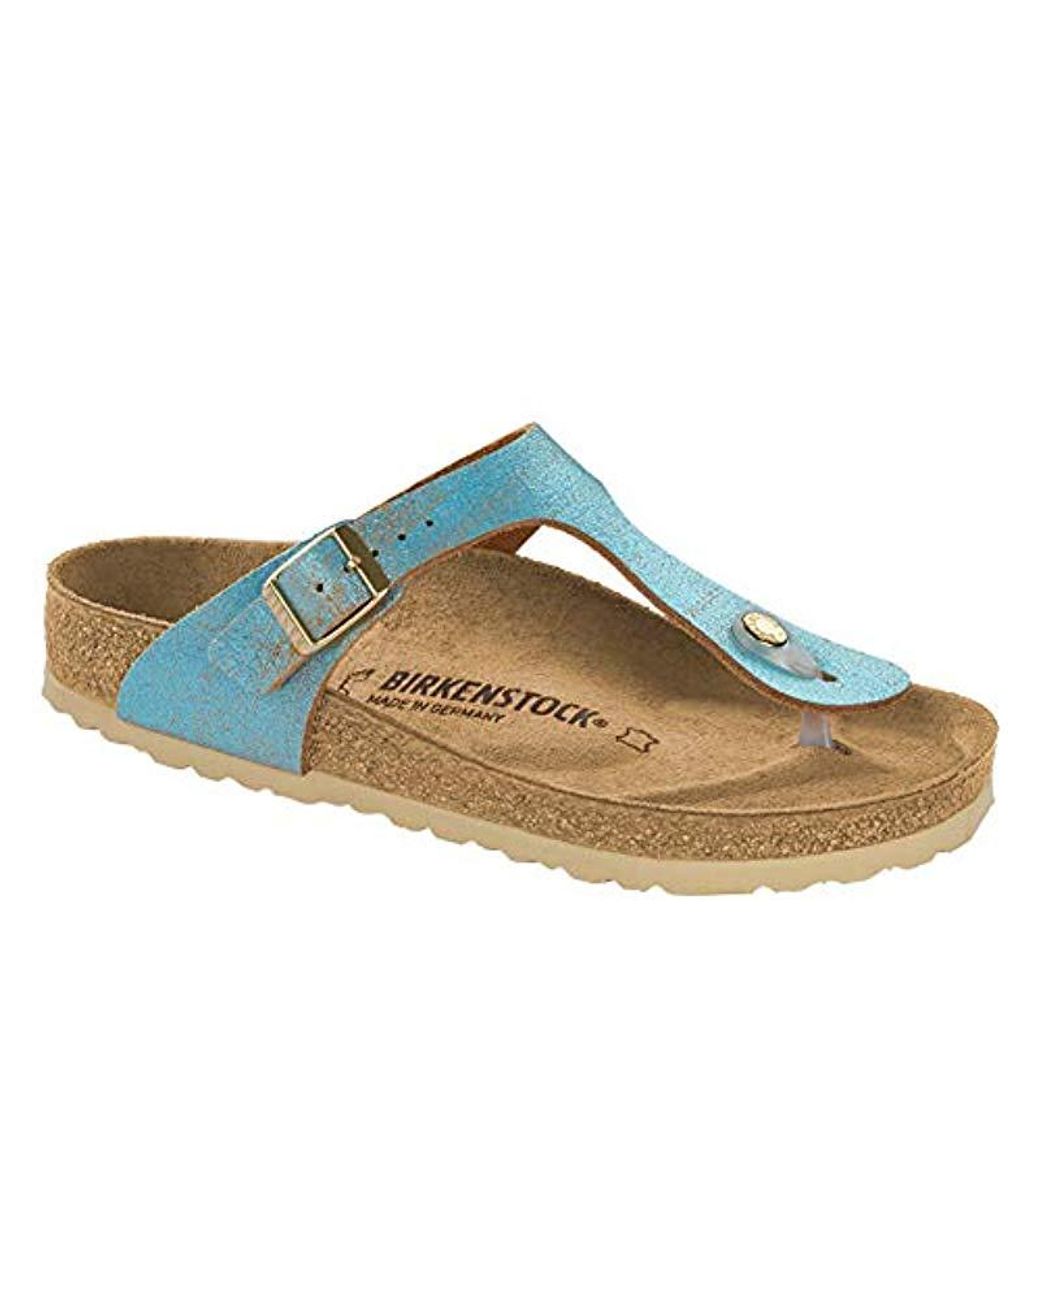 Lyst - Birkenstock Gizeh Unisex Leather Sandals in Blue